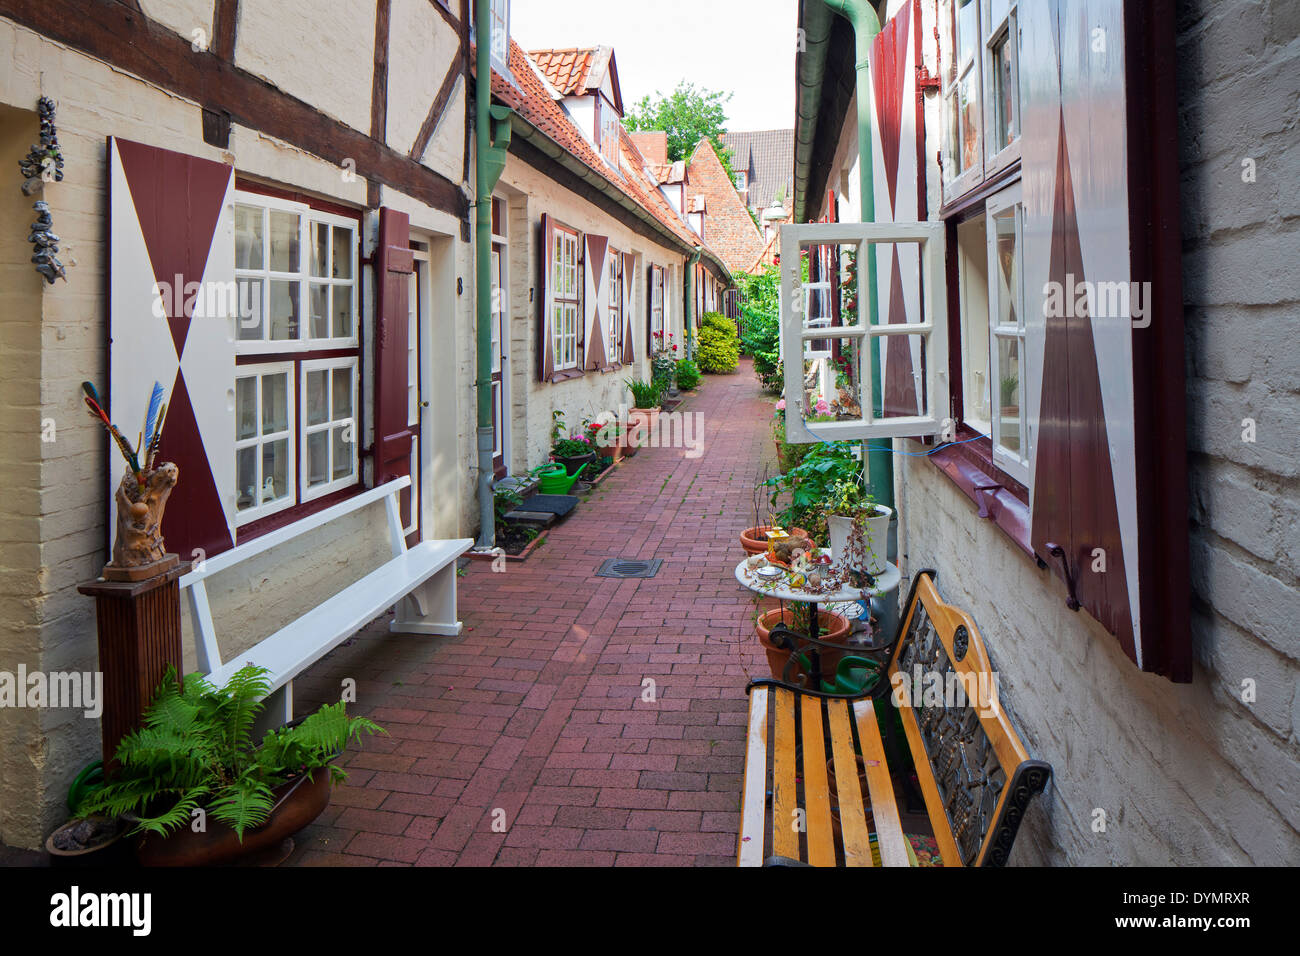 Casas Históricas en el von Höveln pista / Von Hoeveln alley en Lübeck, Schleswig-Holstein, Alemania Foto de stock